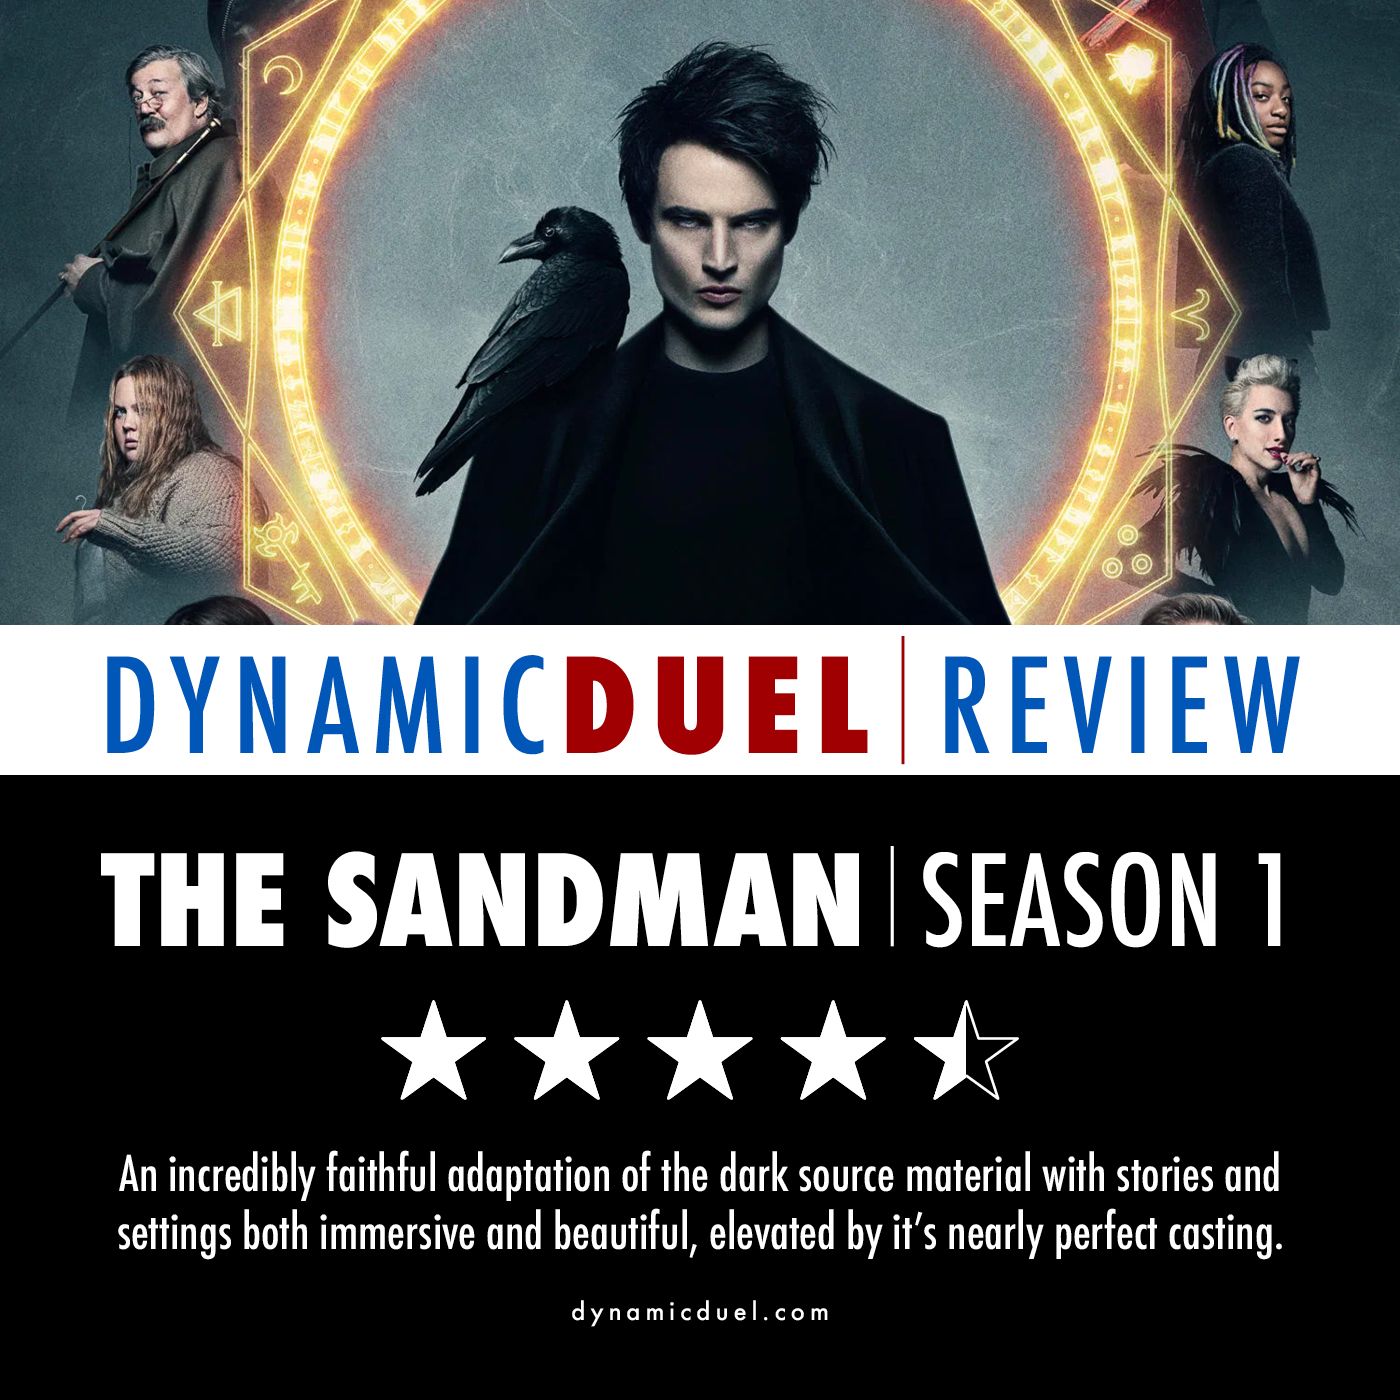 The Sandman Season 1 Review Image